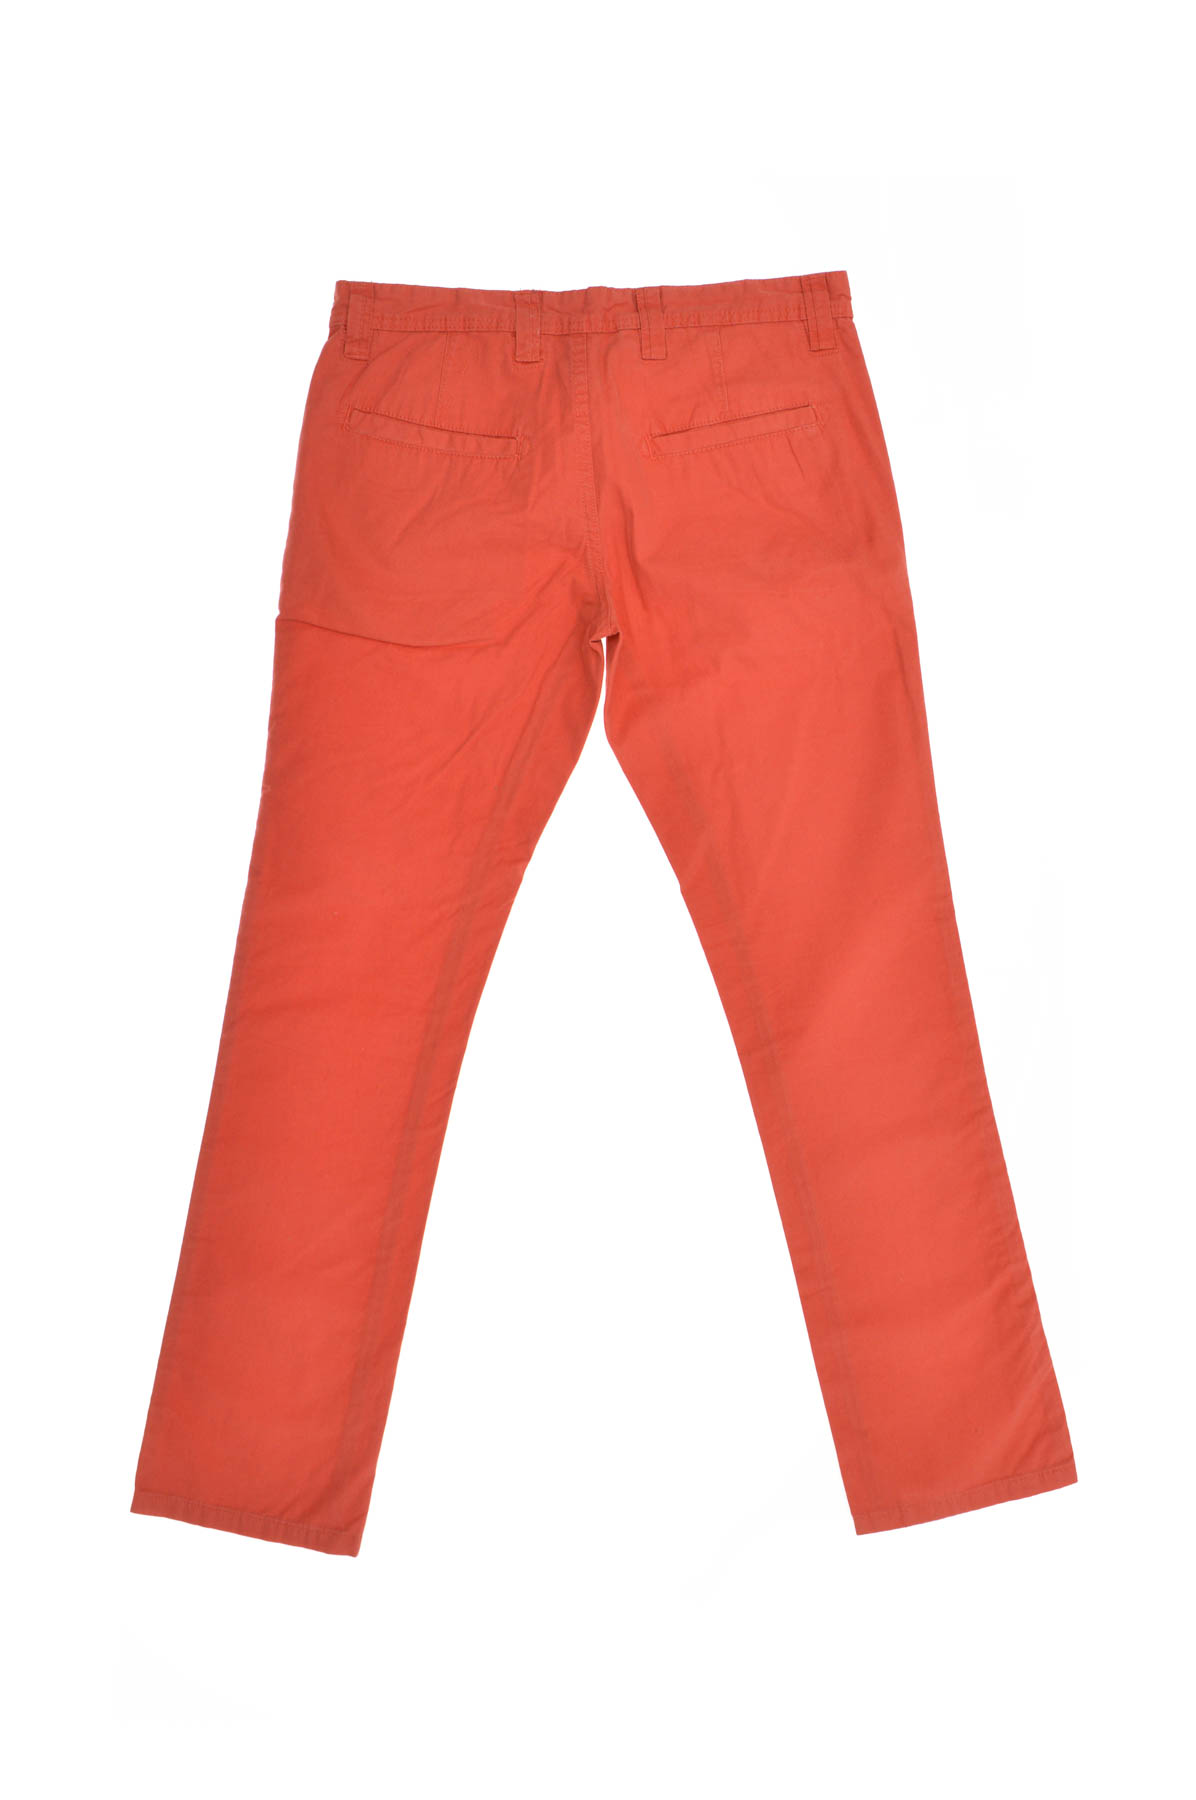 Men's trousers - Identic - 1